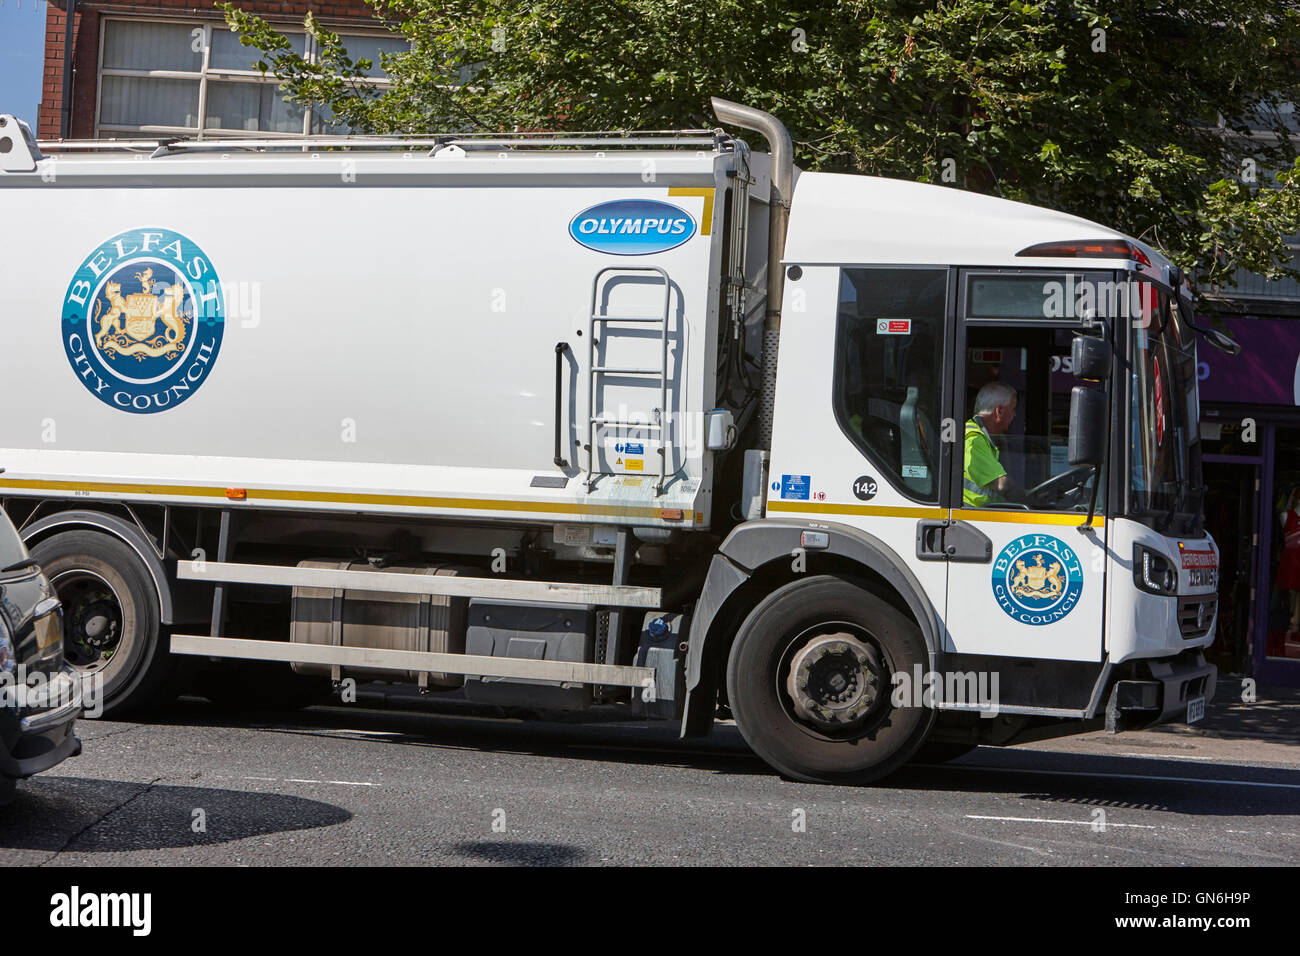 belfast city council refuse truck dennis olympus Stock Photo